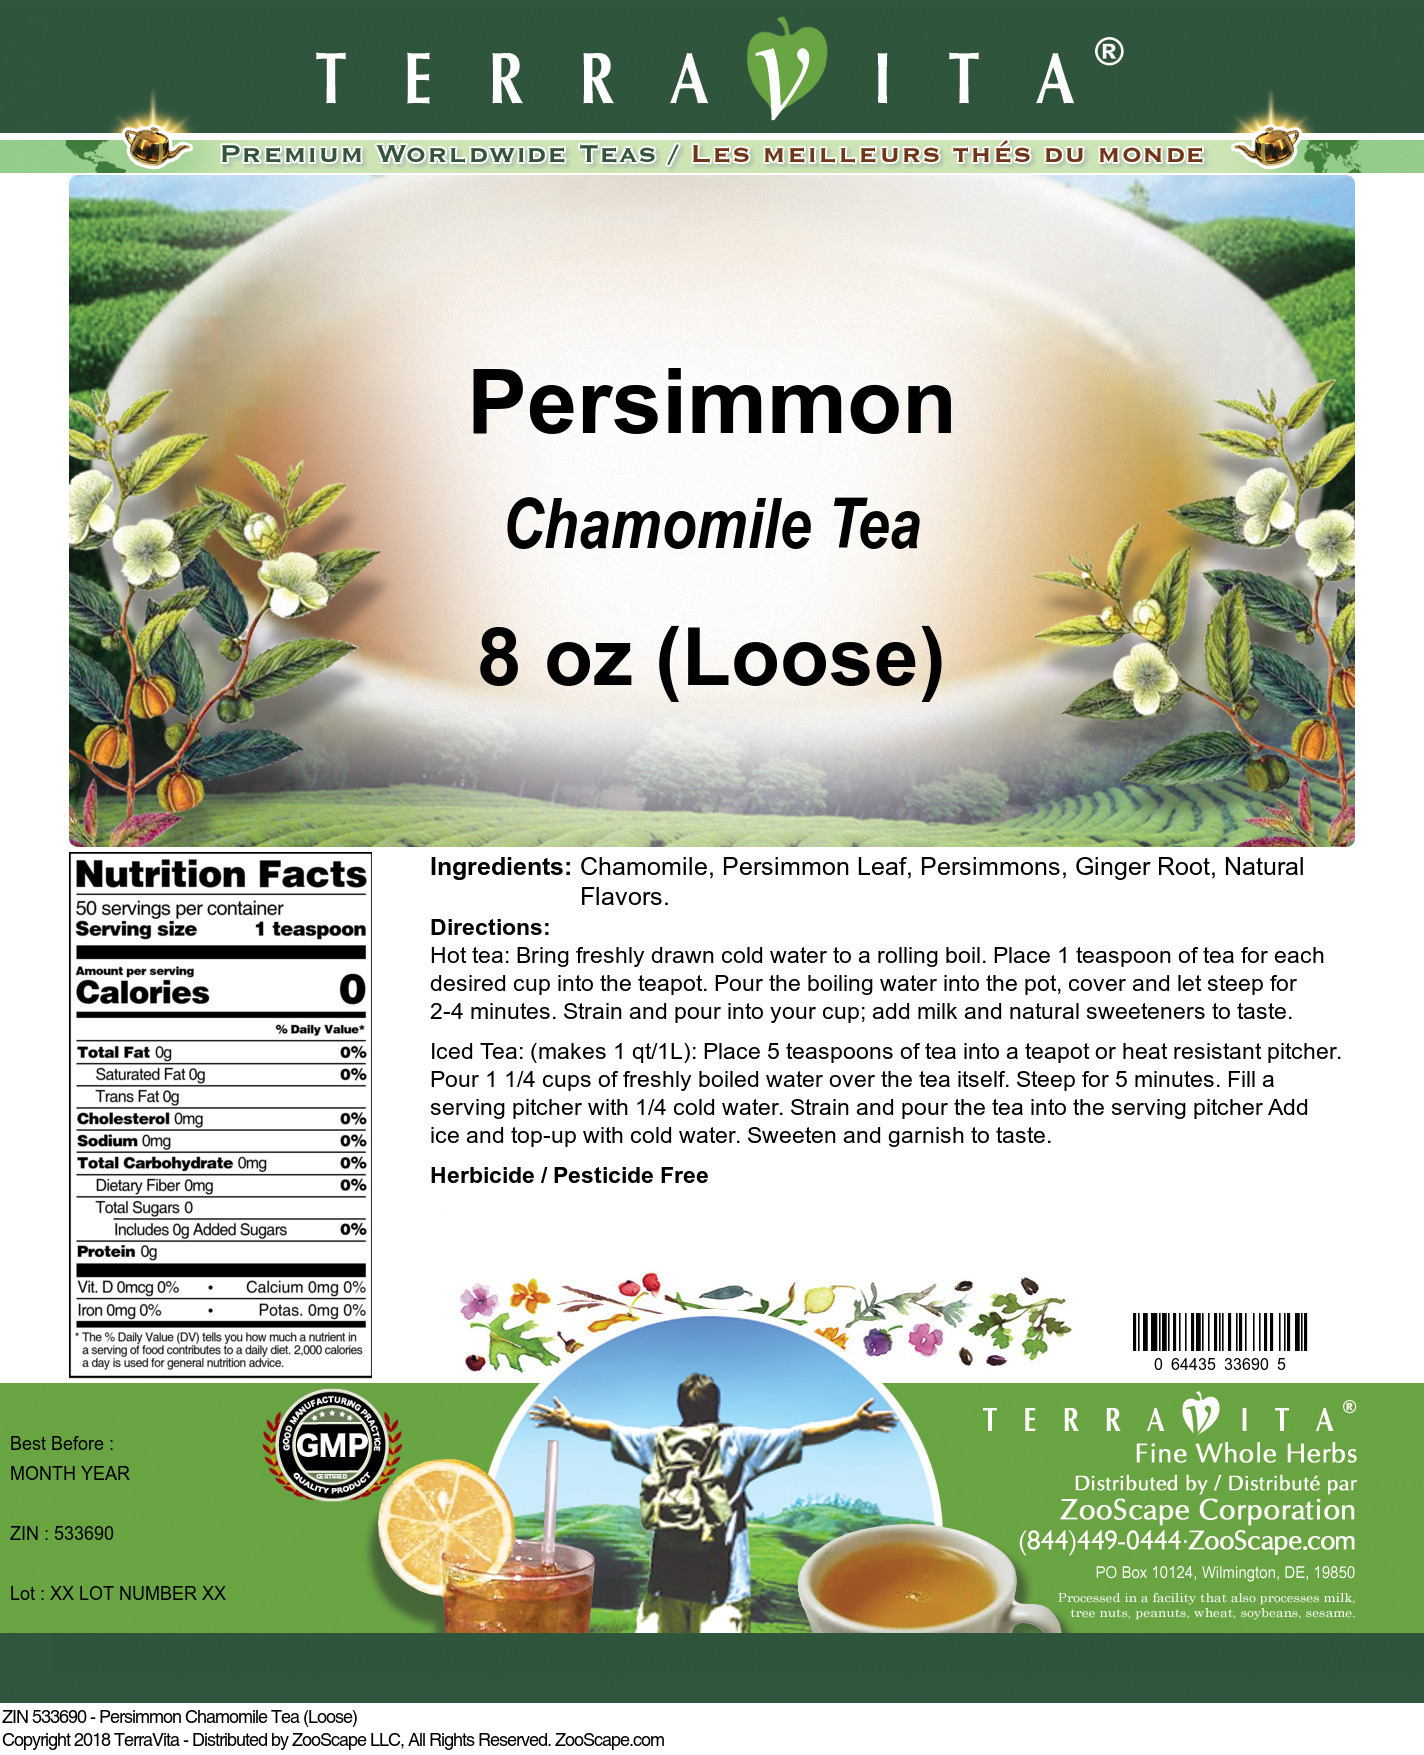 Persimmon Chamomile Tea (Loose) - Label